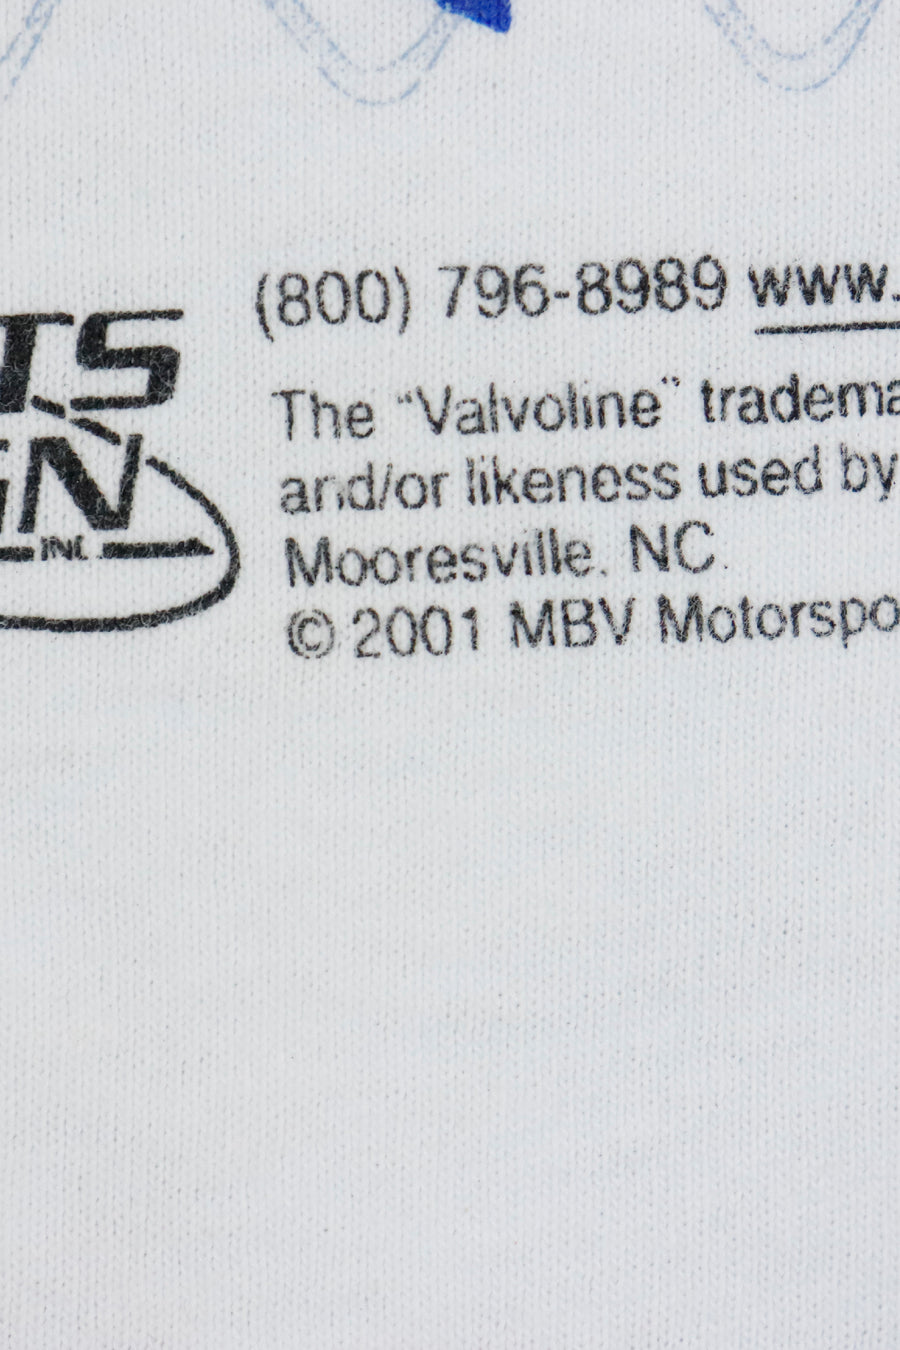 Vintage 2001 Benson Valvoline Racing Nascar T Shirt Sz XL